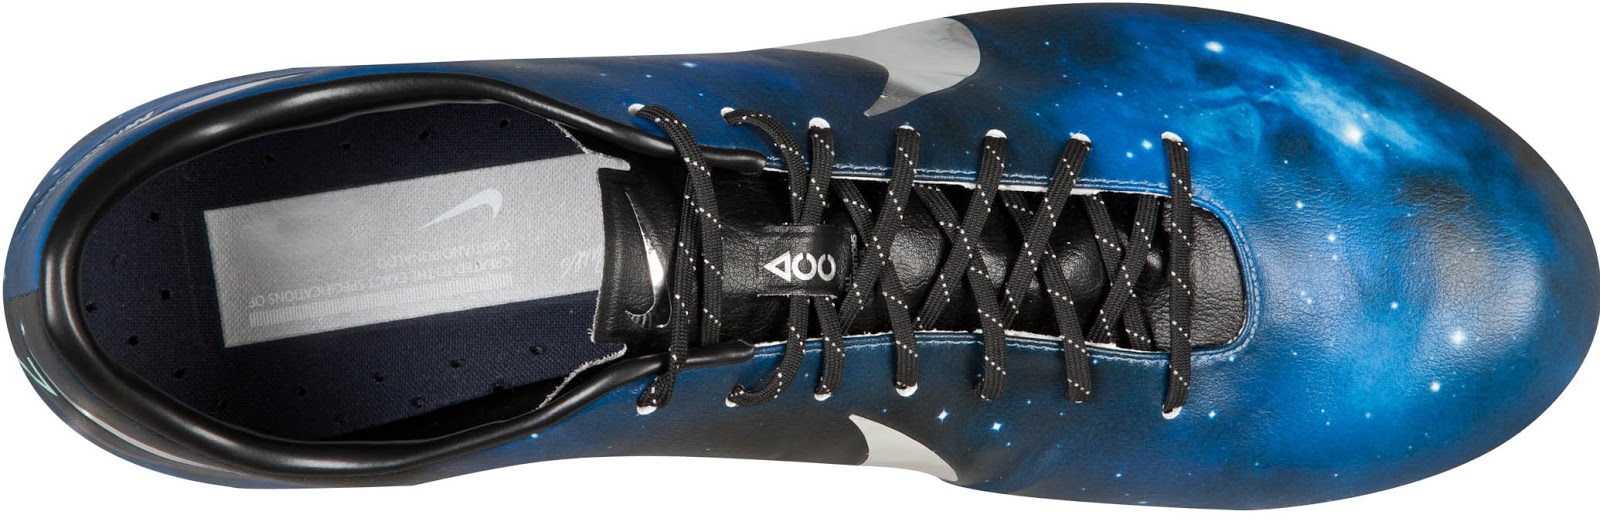 Football Boots Nike Mercurial Vapor XII Elite FG Black Metallic vivid